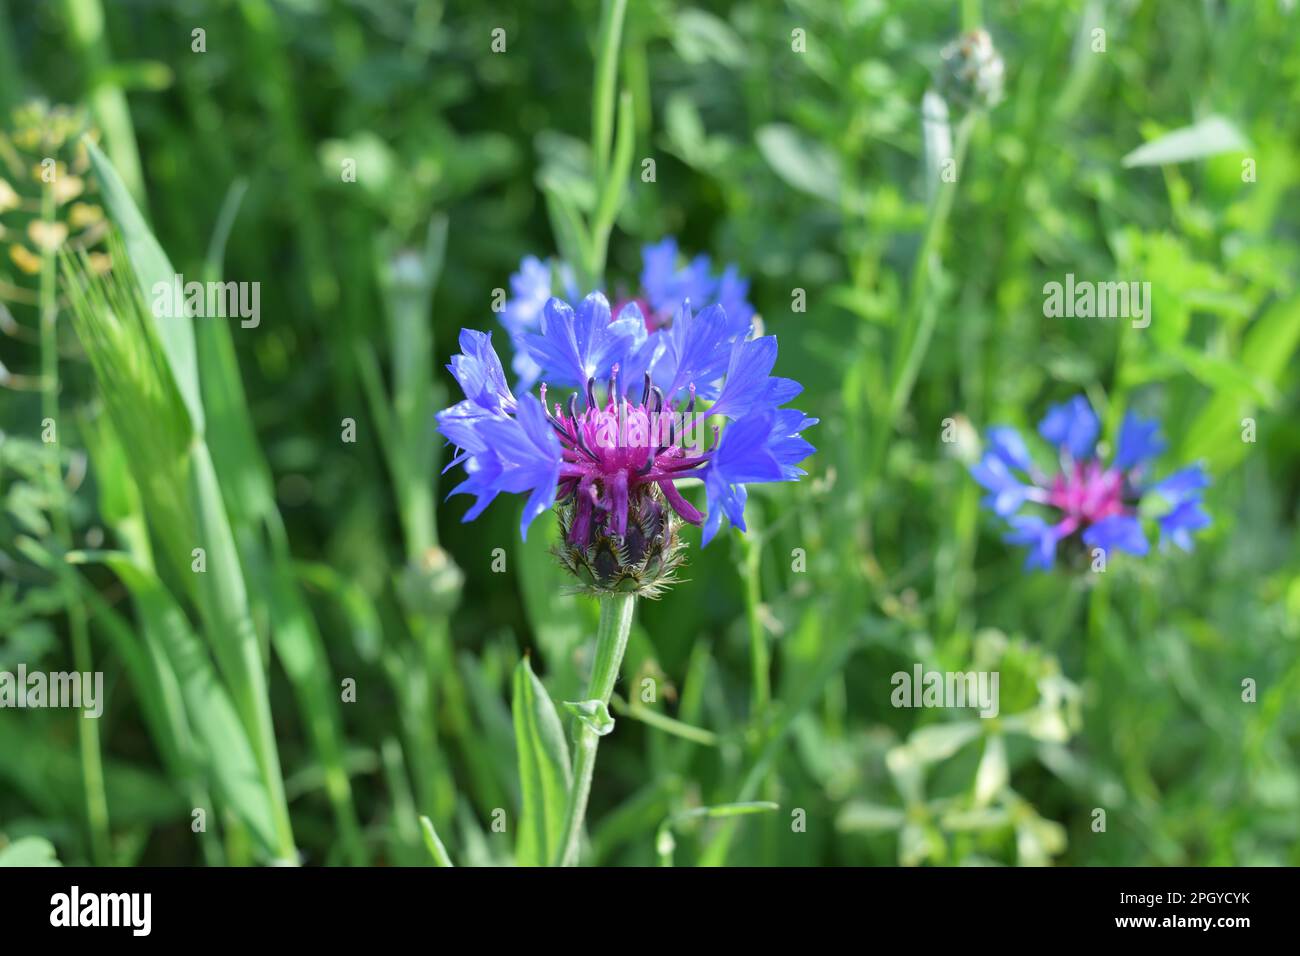 blooming summer blue cornflower close-up Stock Photo